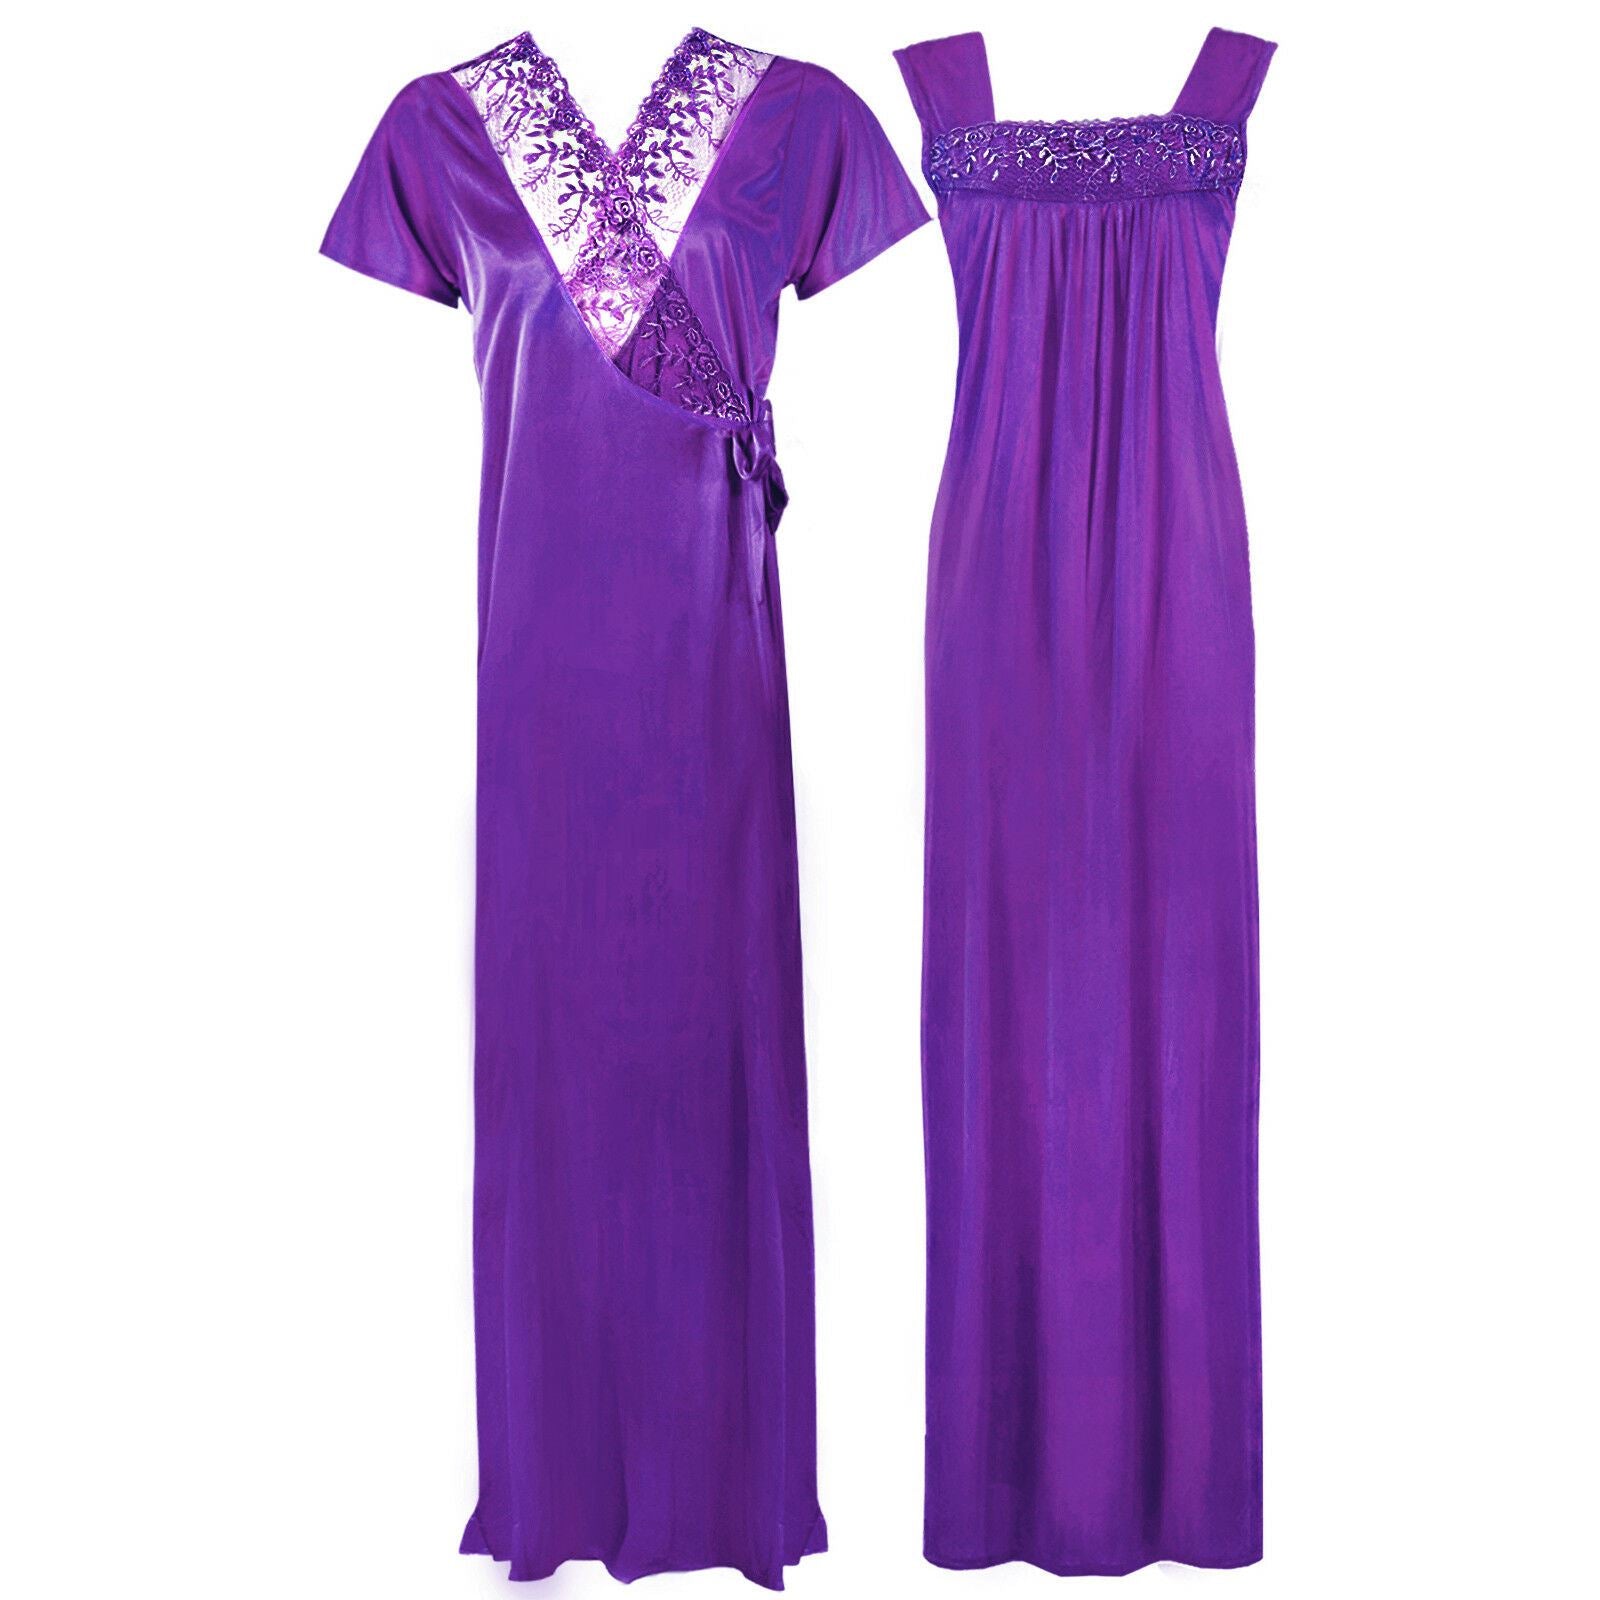 Purple / One Size WOMENS LONG SATIN CHEMISE NIGHTIE NIGHTDRESS LADIES DRESSING GOWN 2PC SET 8-16 The Orange Tags